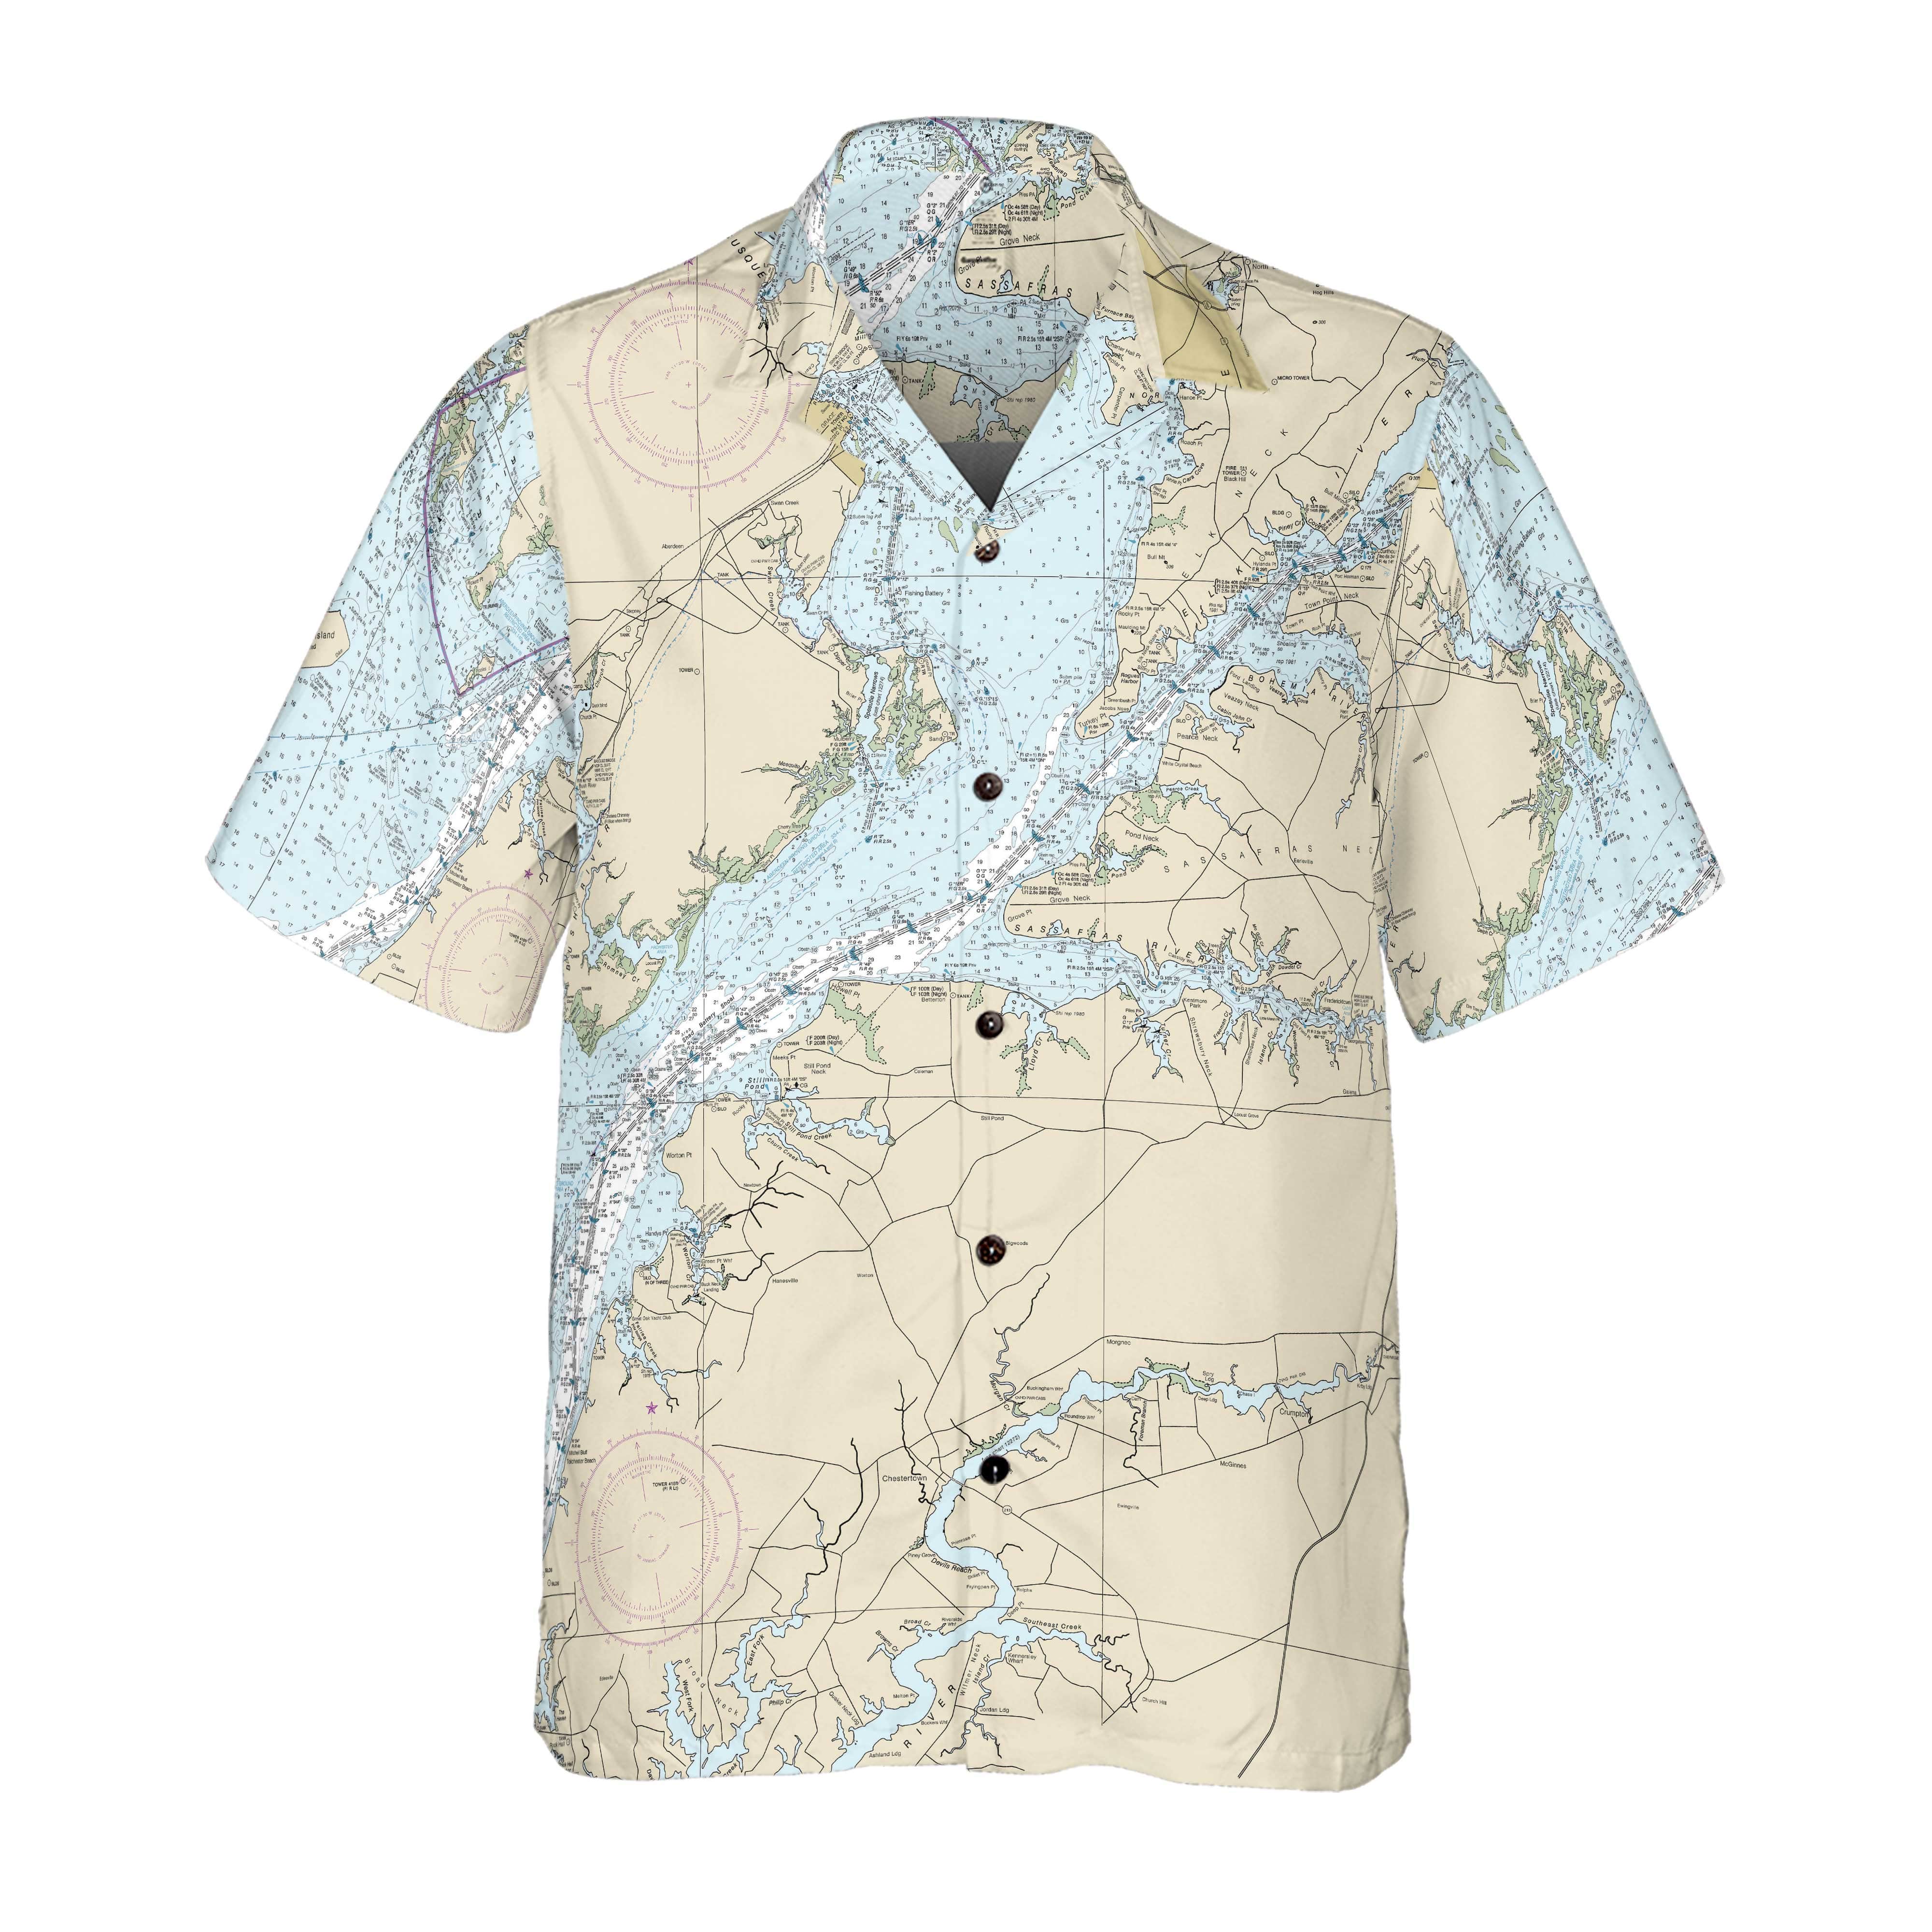 The Sassafras River Navigator Coconut Button Camp Shirt